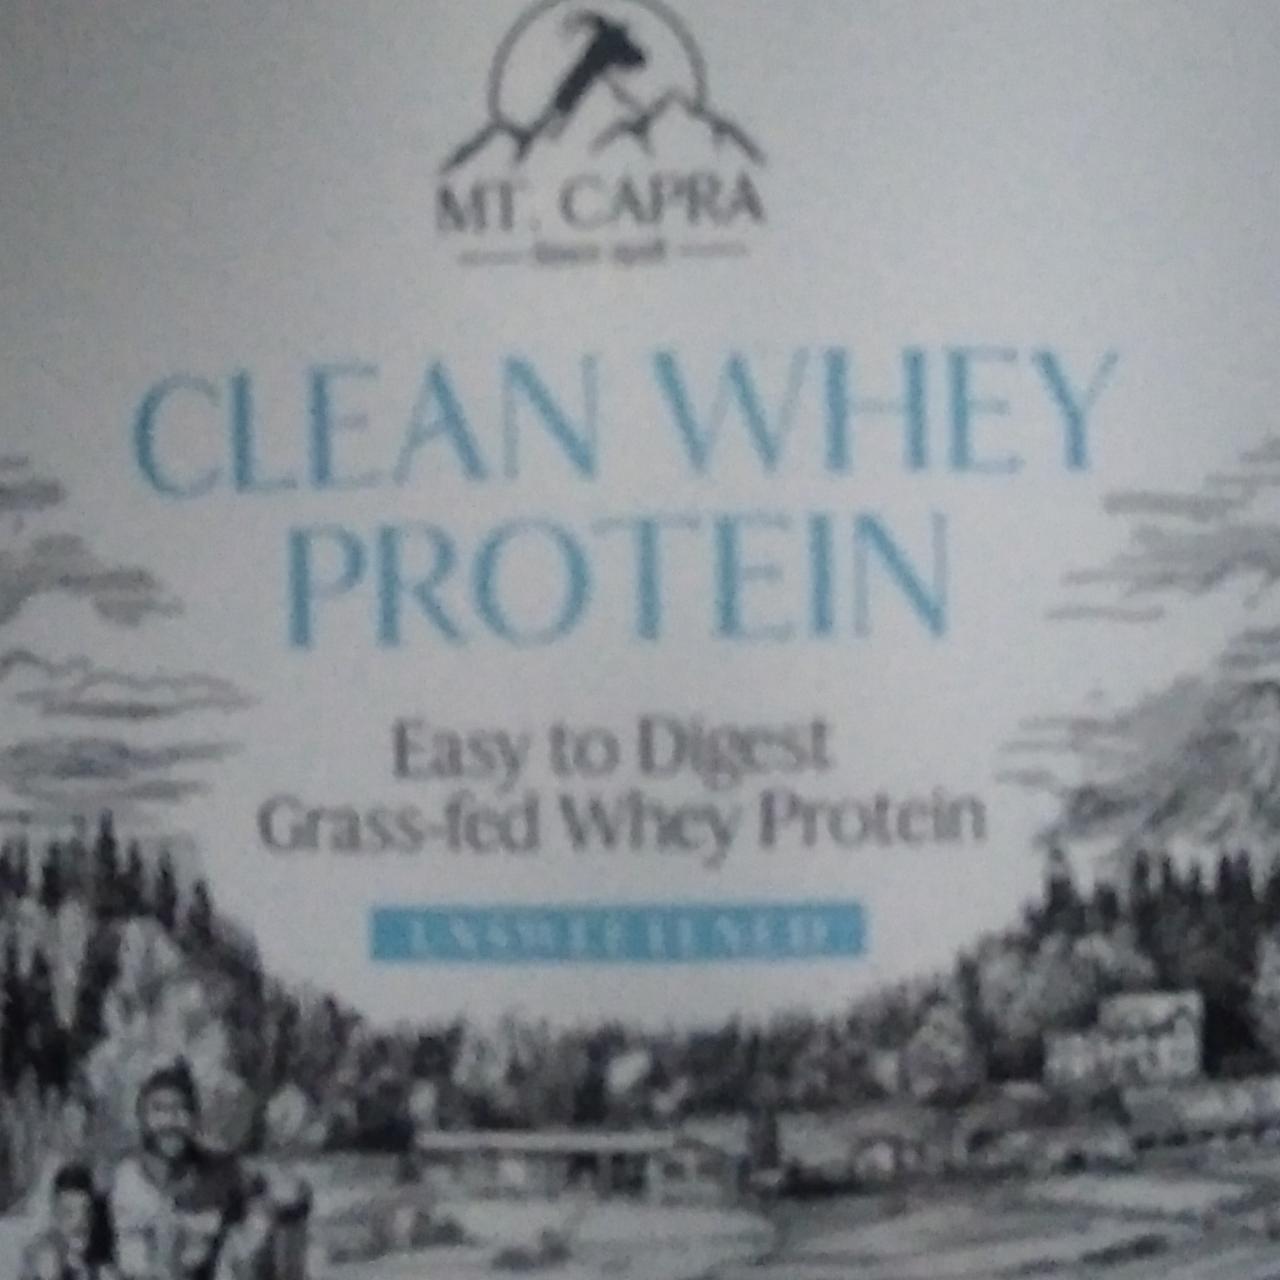 Fotografie - Clean whey protein unsweetened MT. Capra